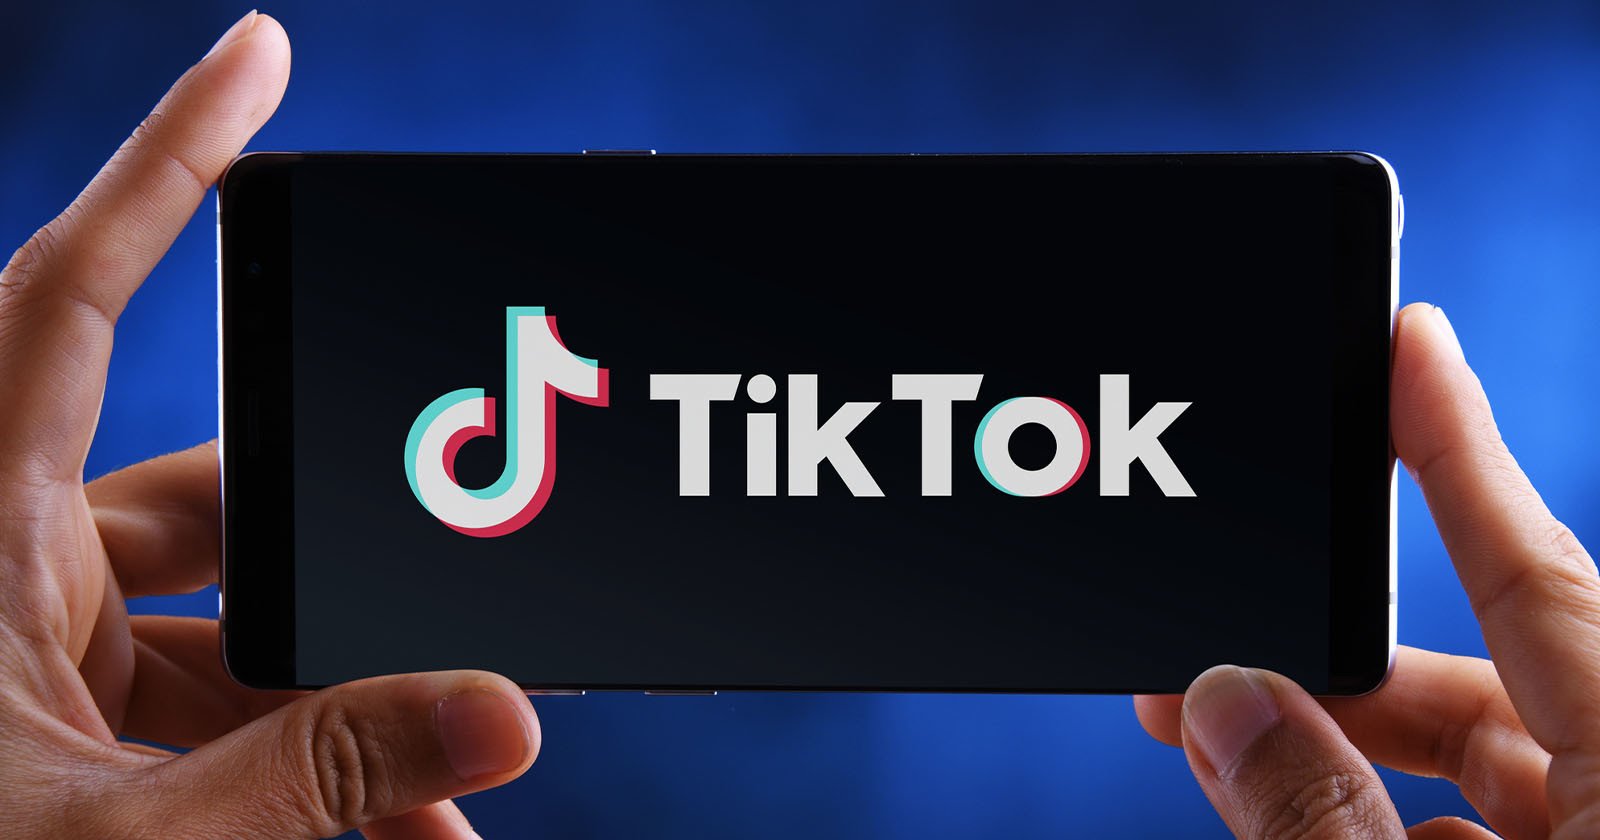  tiktok confirms will ban app unless sold 